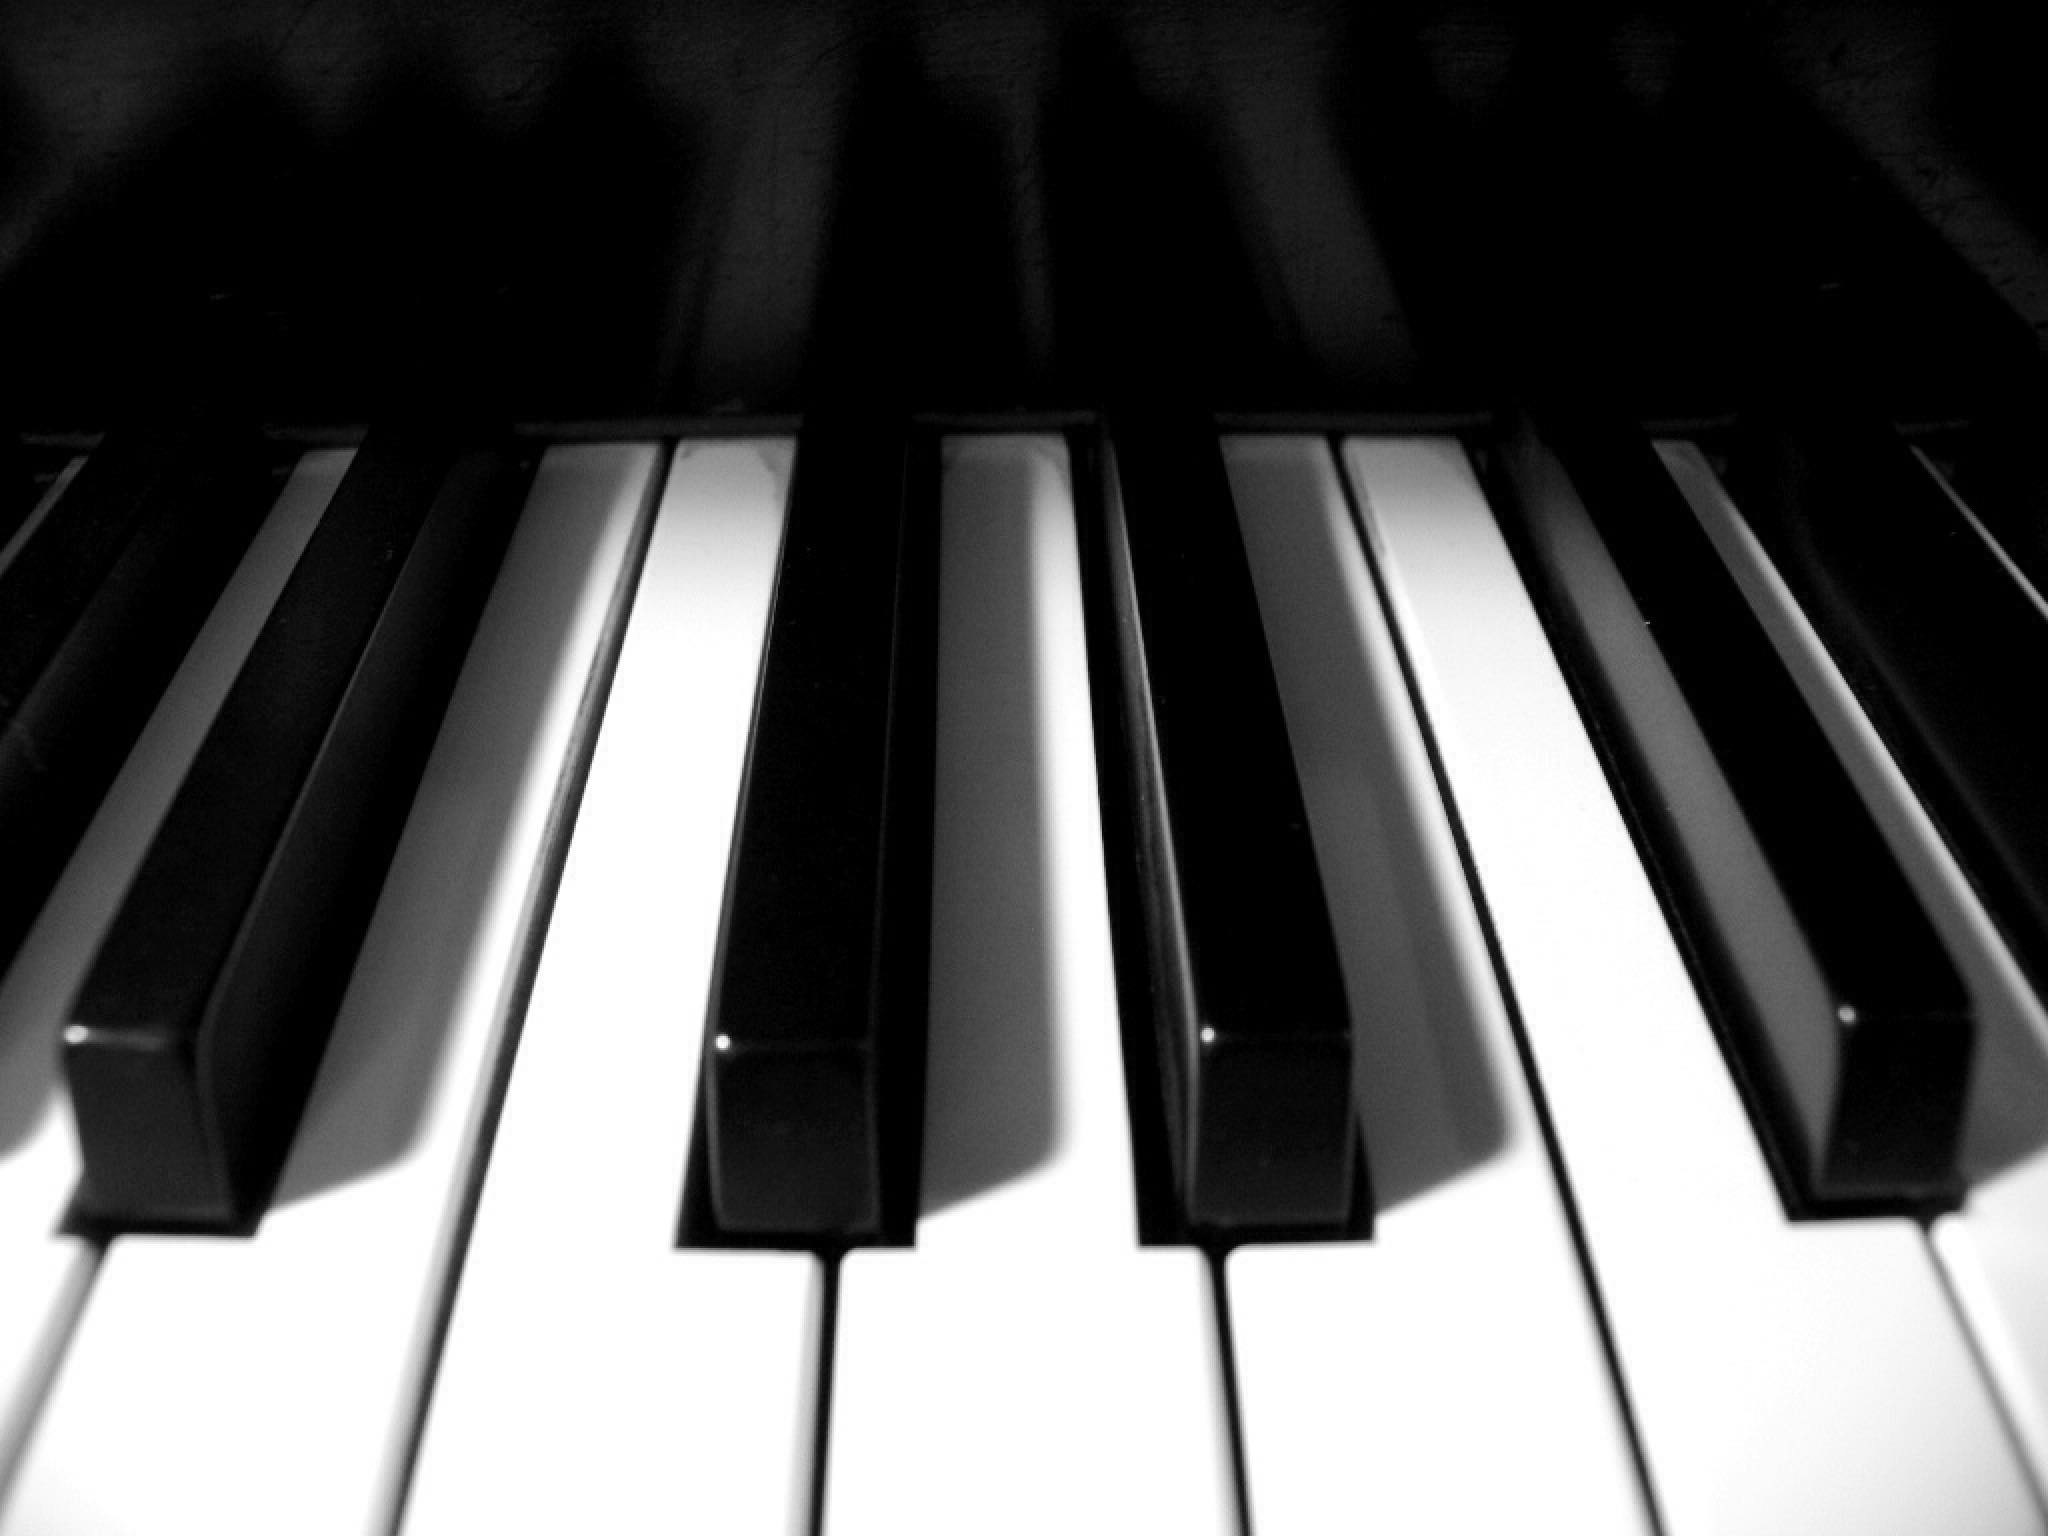 Clases de piano para principiantes o intermedios en línea o presencial